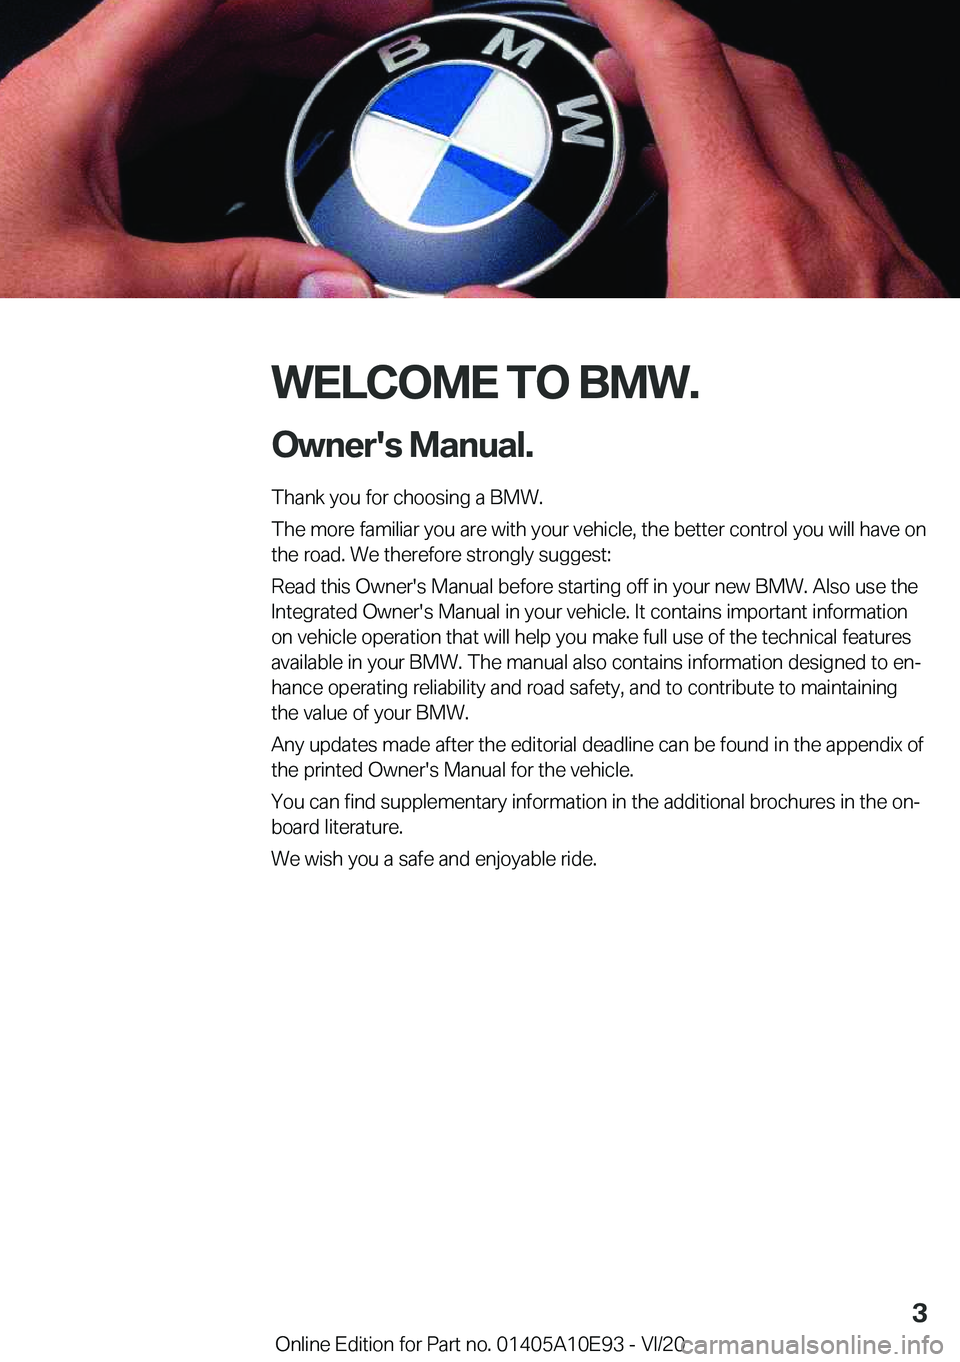 BMW X3 2021  Owners Manual �W�E�L�C�O�M�E��T�O��B�M�W�.�O�w�n�e�r�'�s��M�a�n�u�a�l�.
�T�h�a�n�k��y�o�u��f�o�r��c�h�o�o�s�i�n�g��a��B�M�W�.
�T�h�e��m�o�r�e��f�a�m�i�l�i�a�r��y�o�u��a�r�e��w�i�t�h��y�o�u�r��v�e